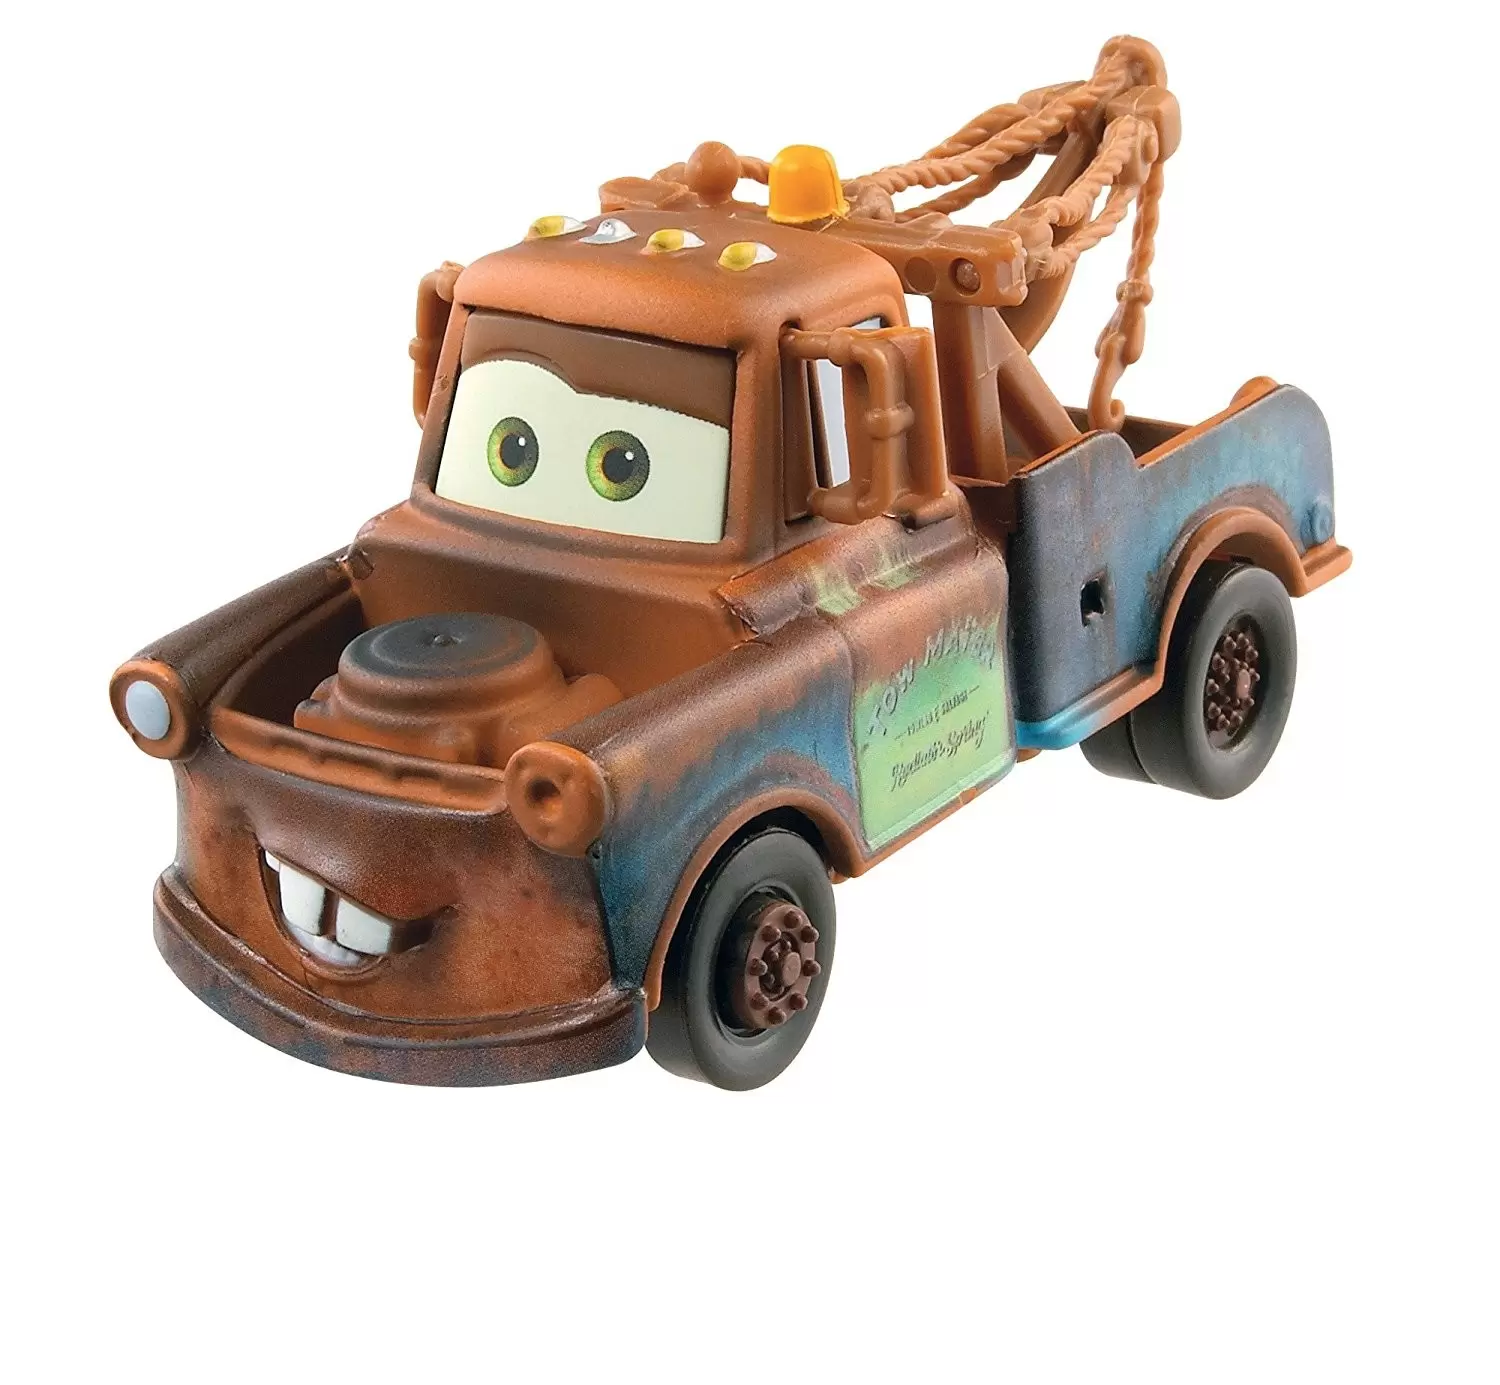 Cars 3 models - Mater